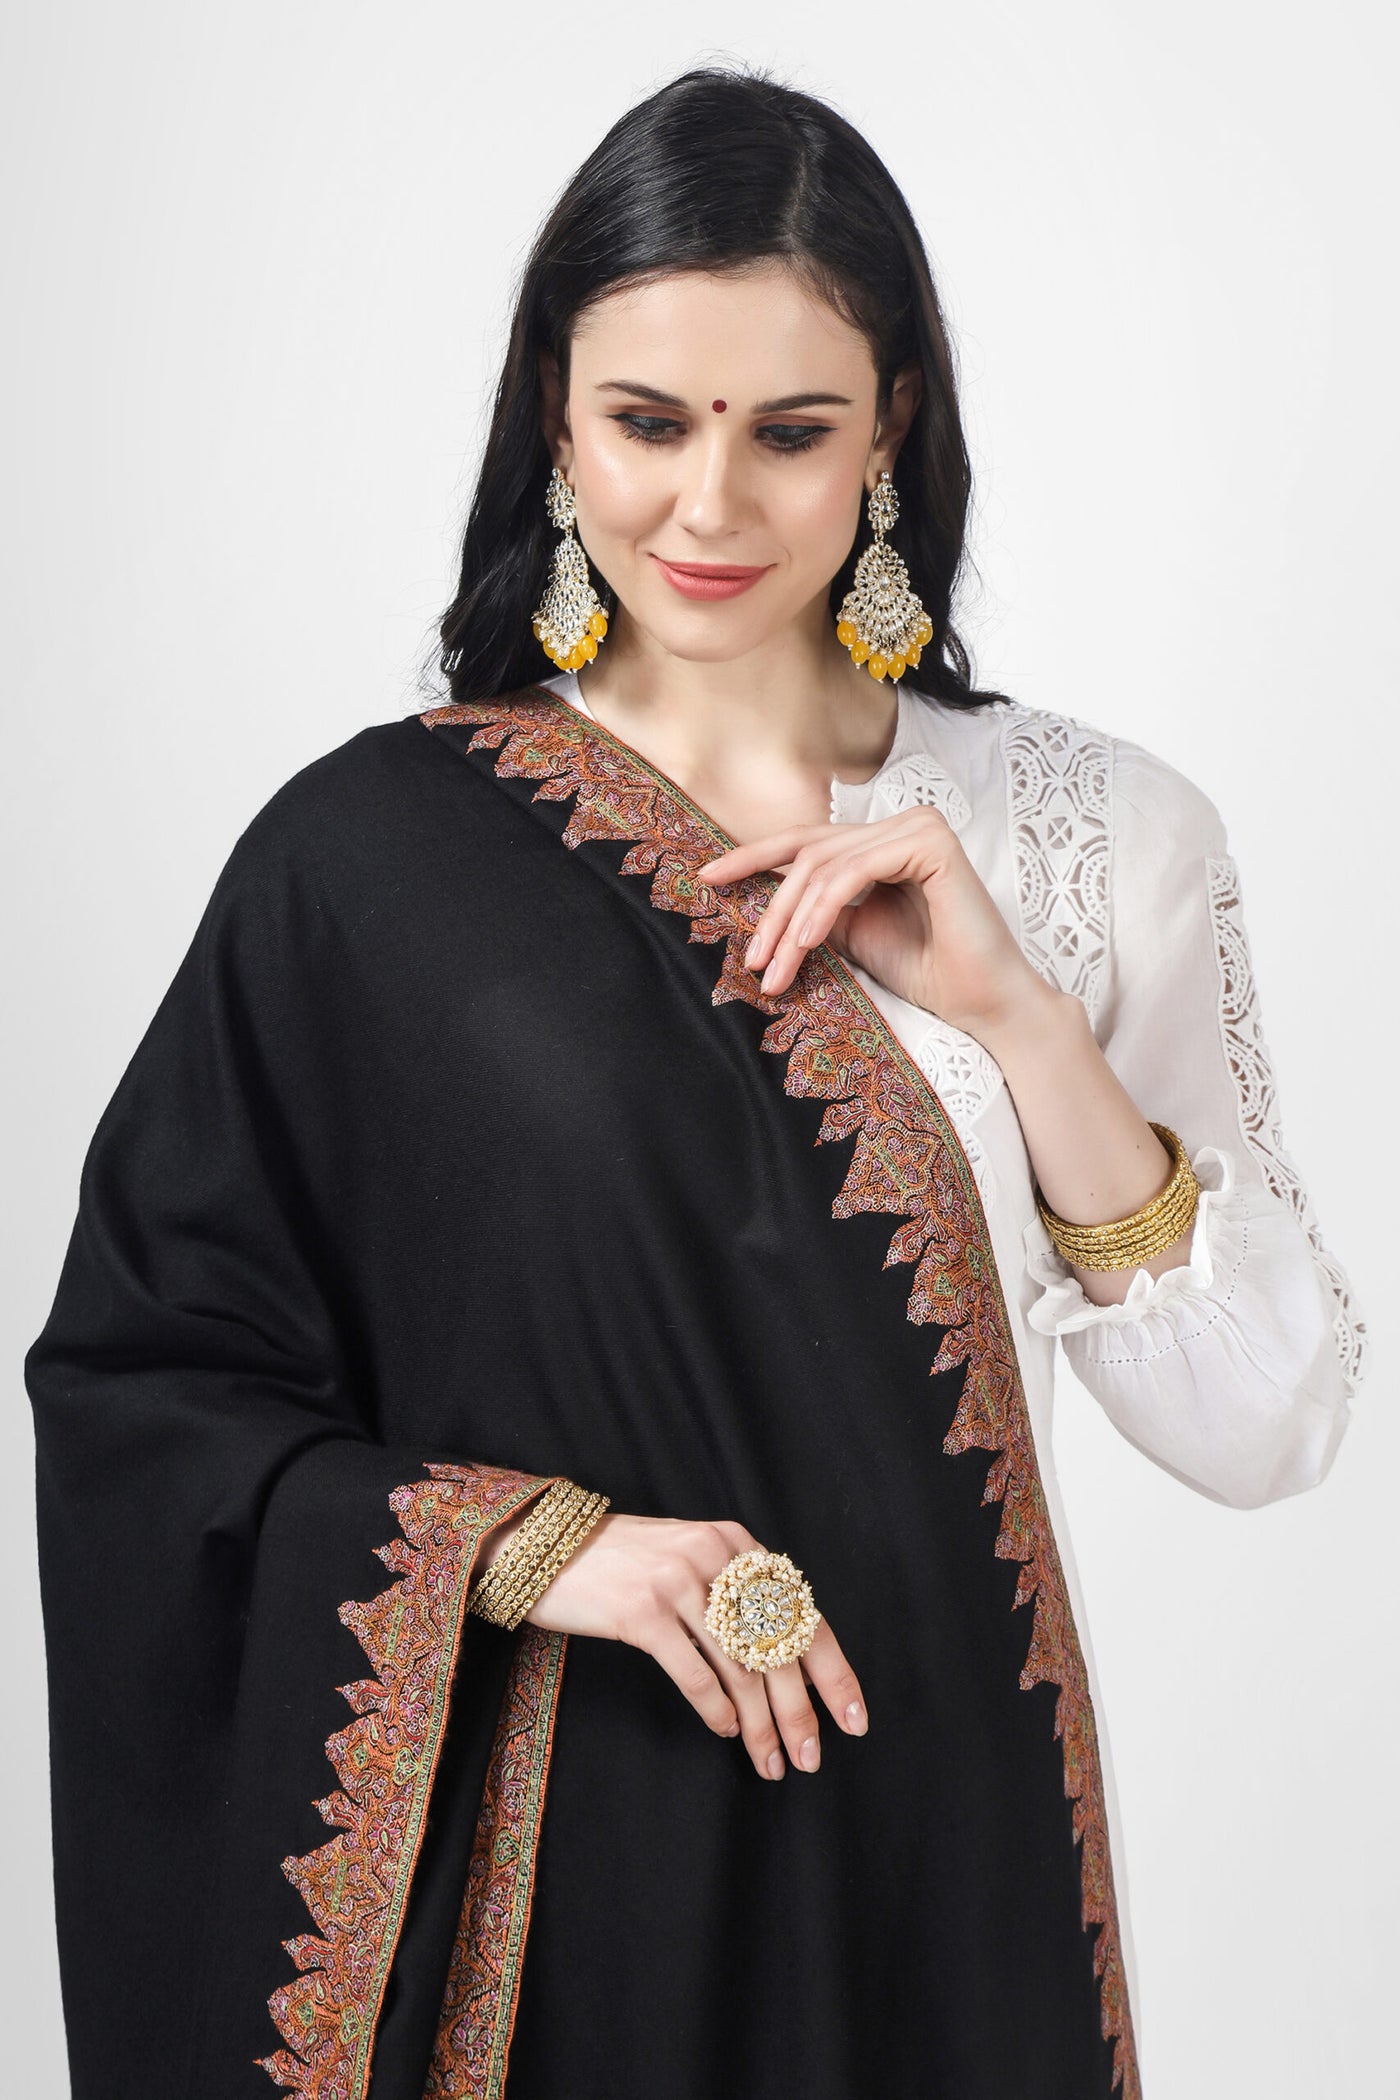 PASHMINA DELHI -Black  Ali design Pashmina Border sozni shawl